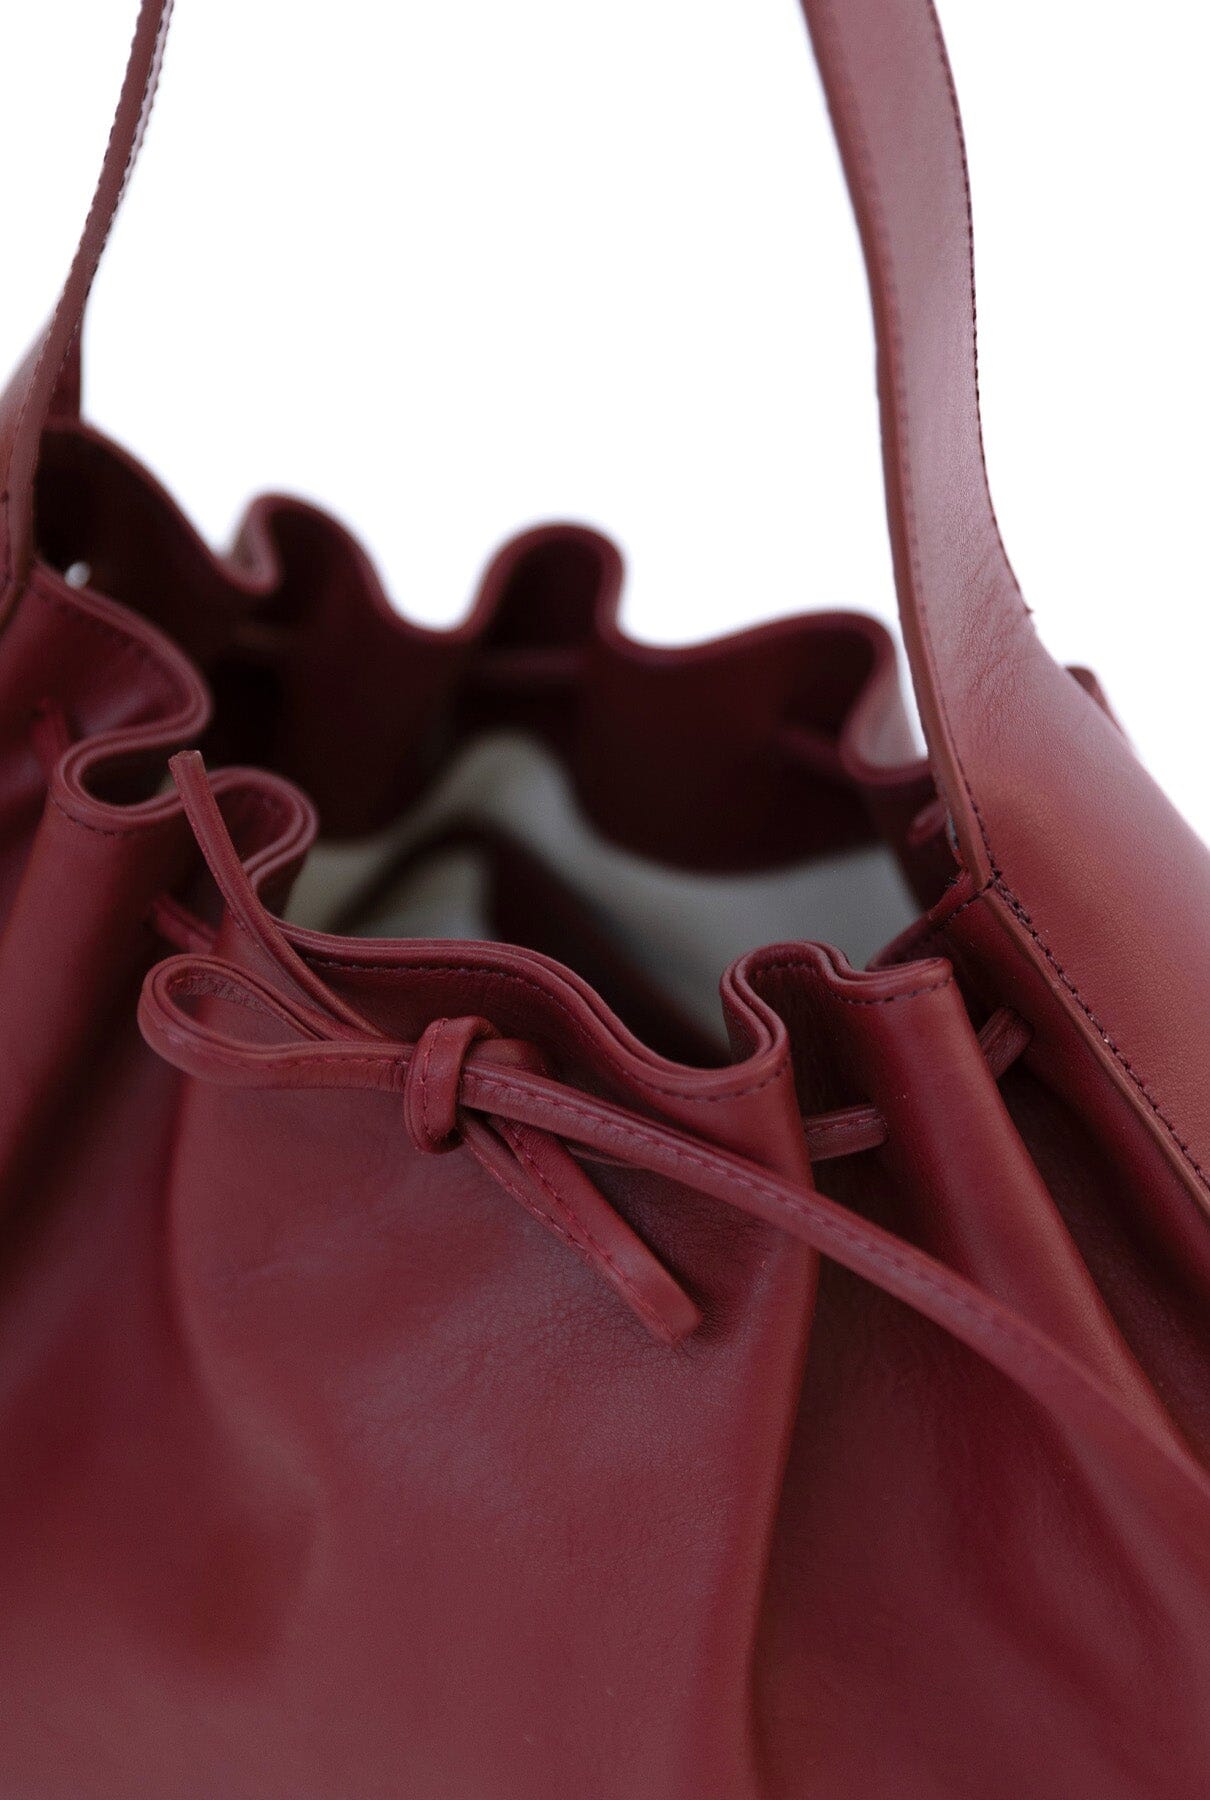 Sac Leather Bag Wine Shoulder bags The Villã Concept 